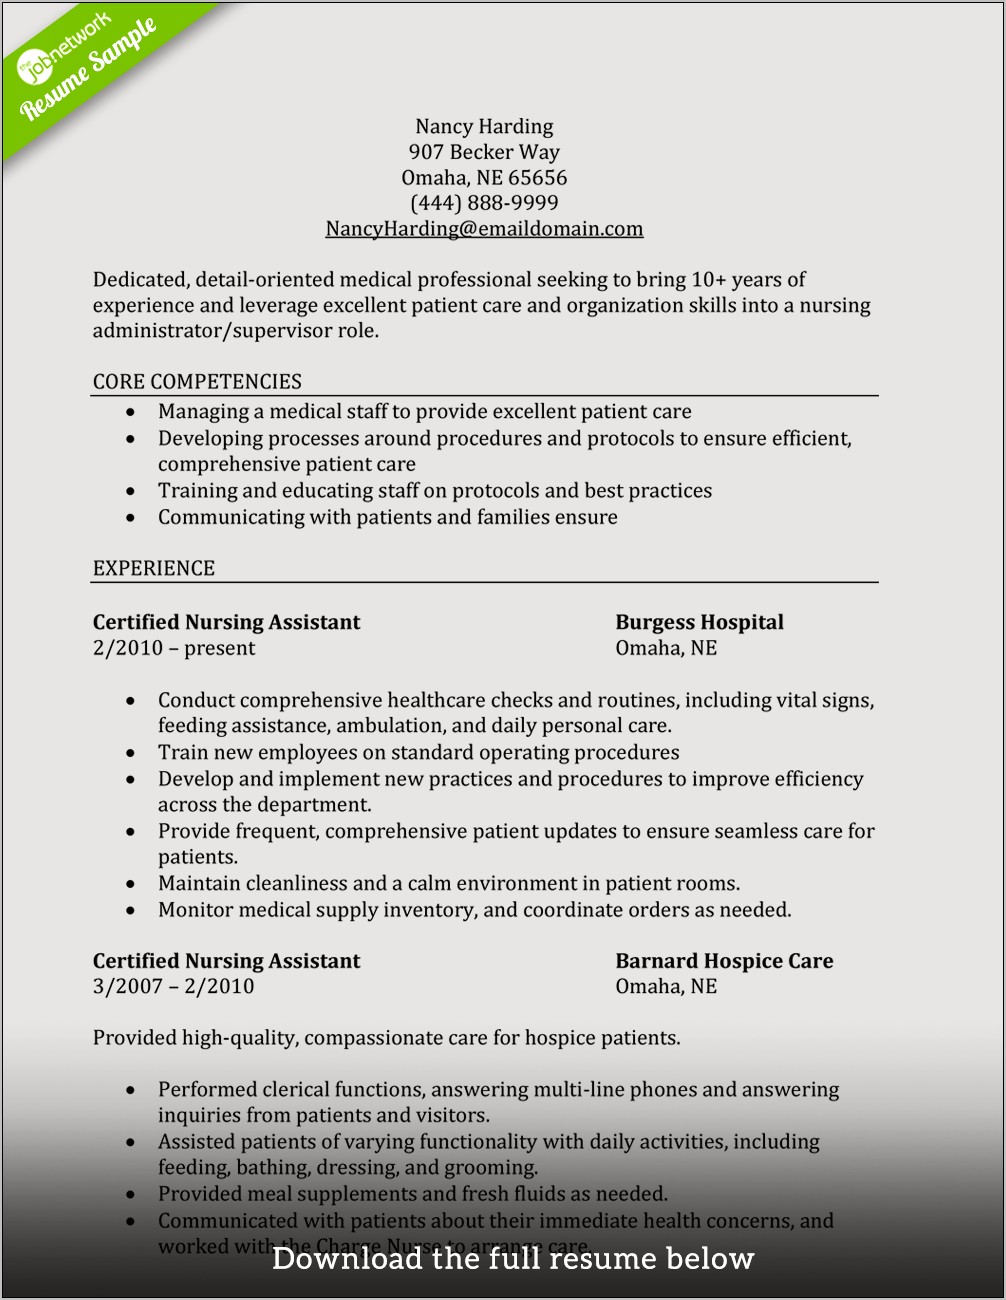 Resume Skills For Nursing Assistant